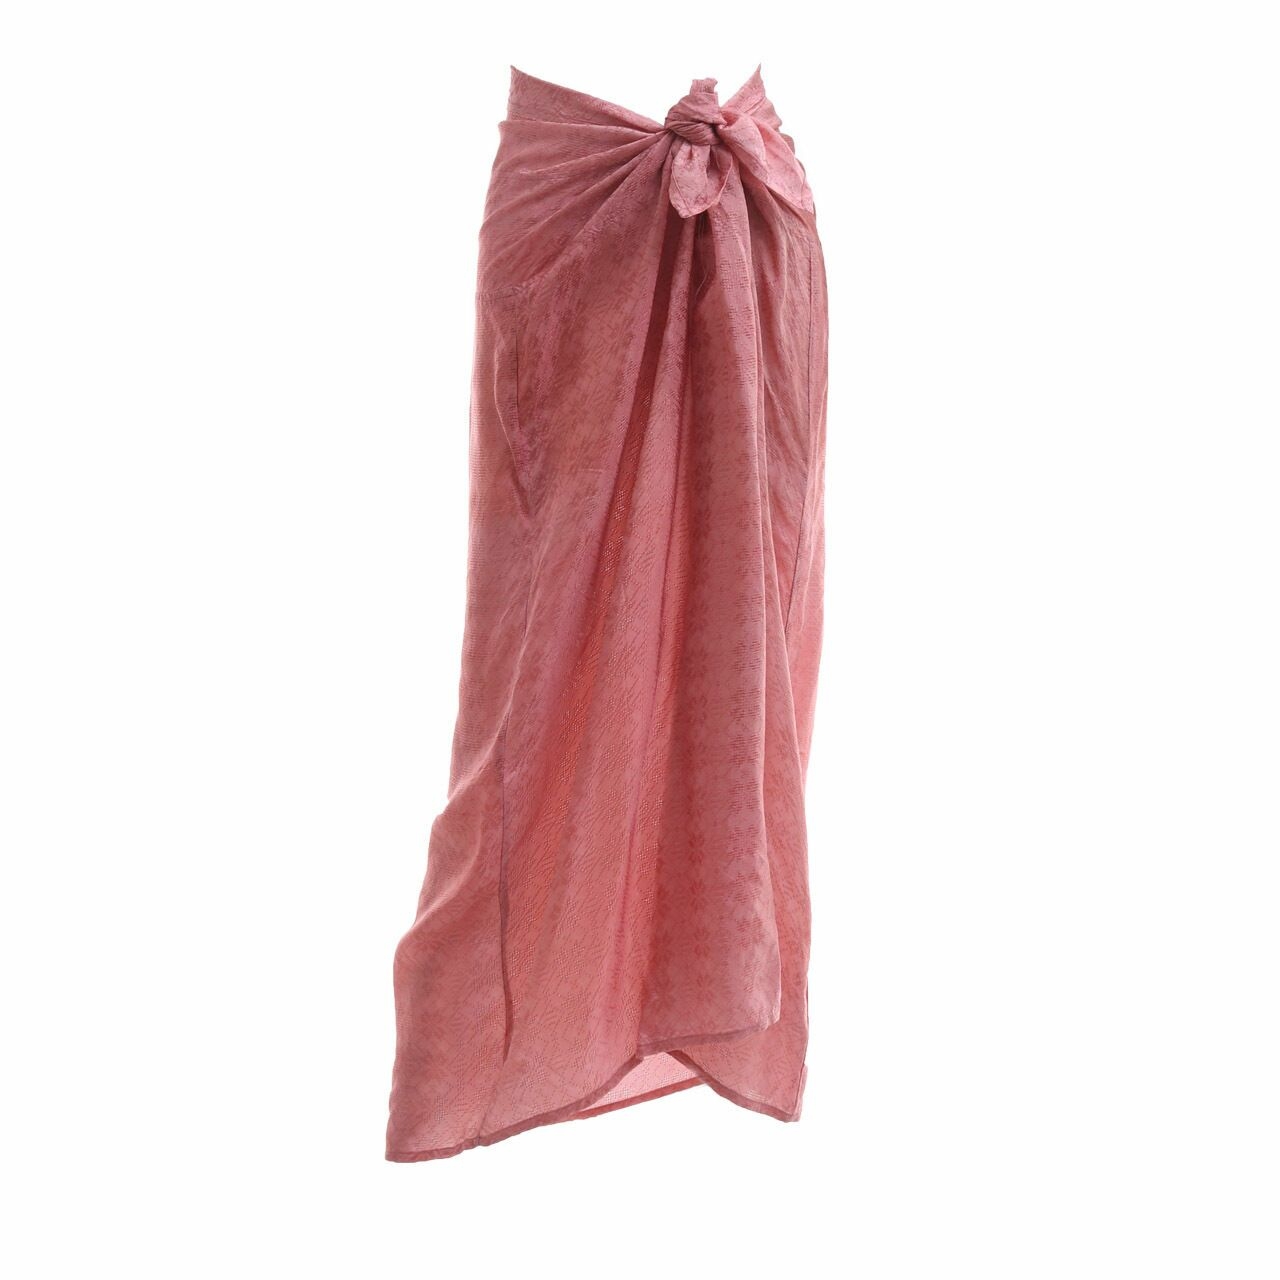 Alshaya by Sasha Tutuko Pink Midi Skirt